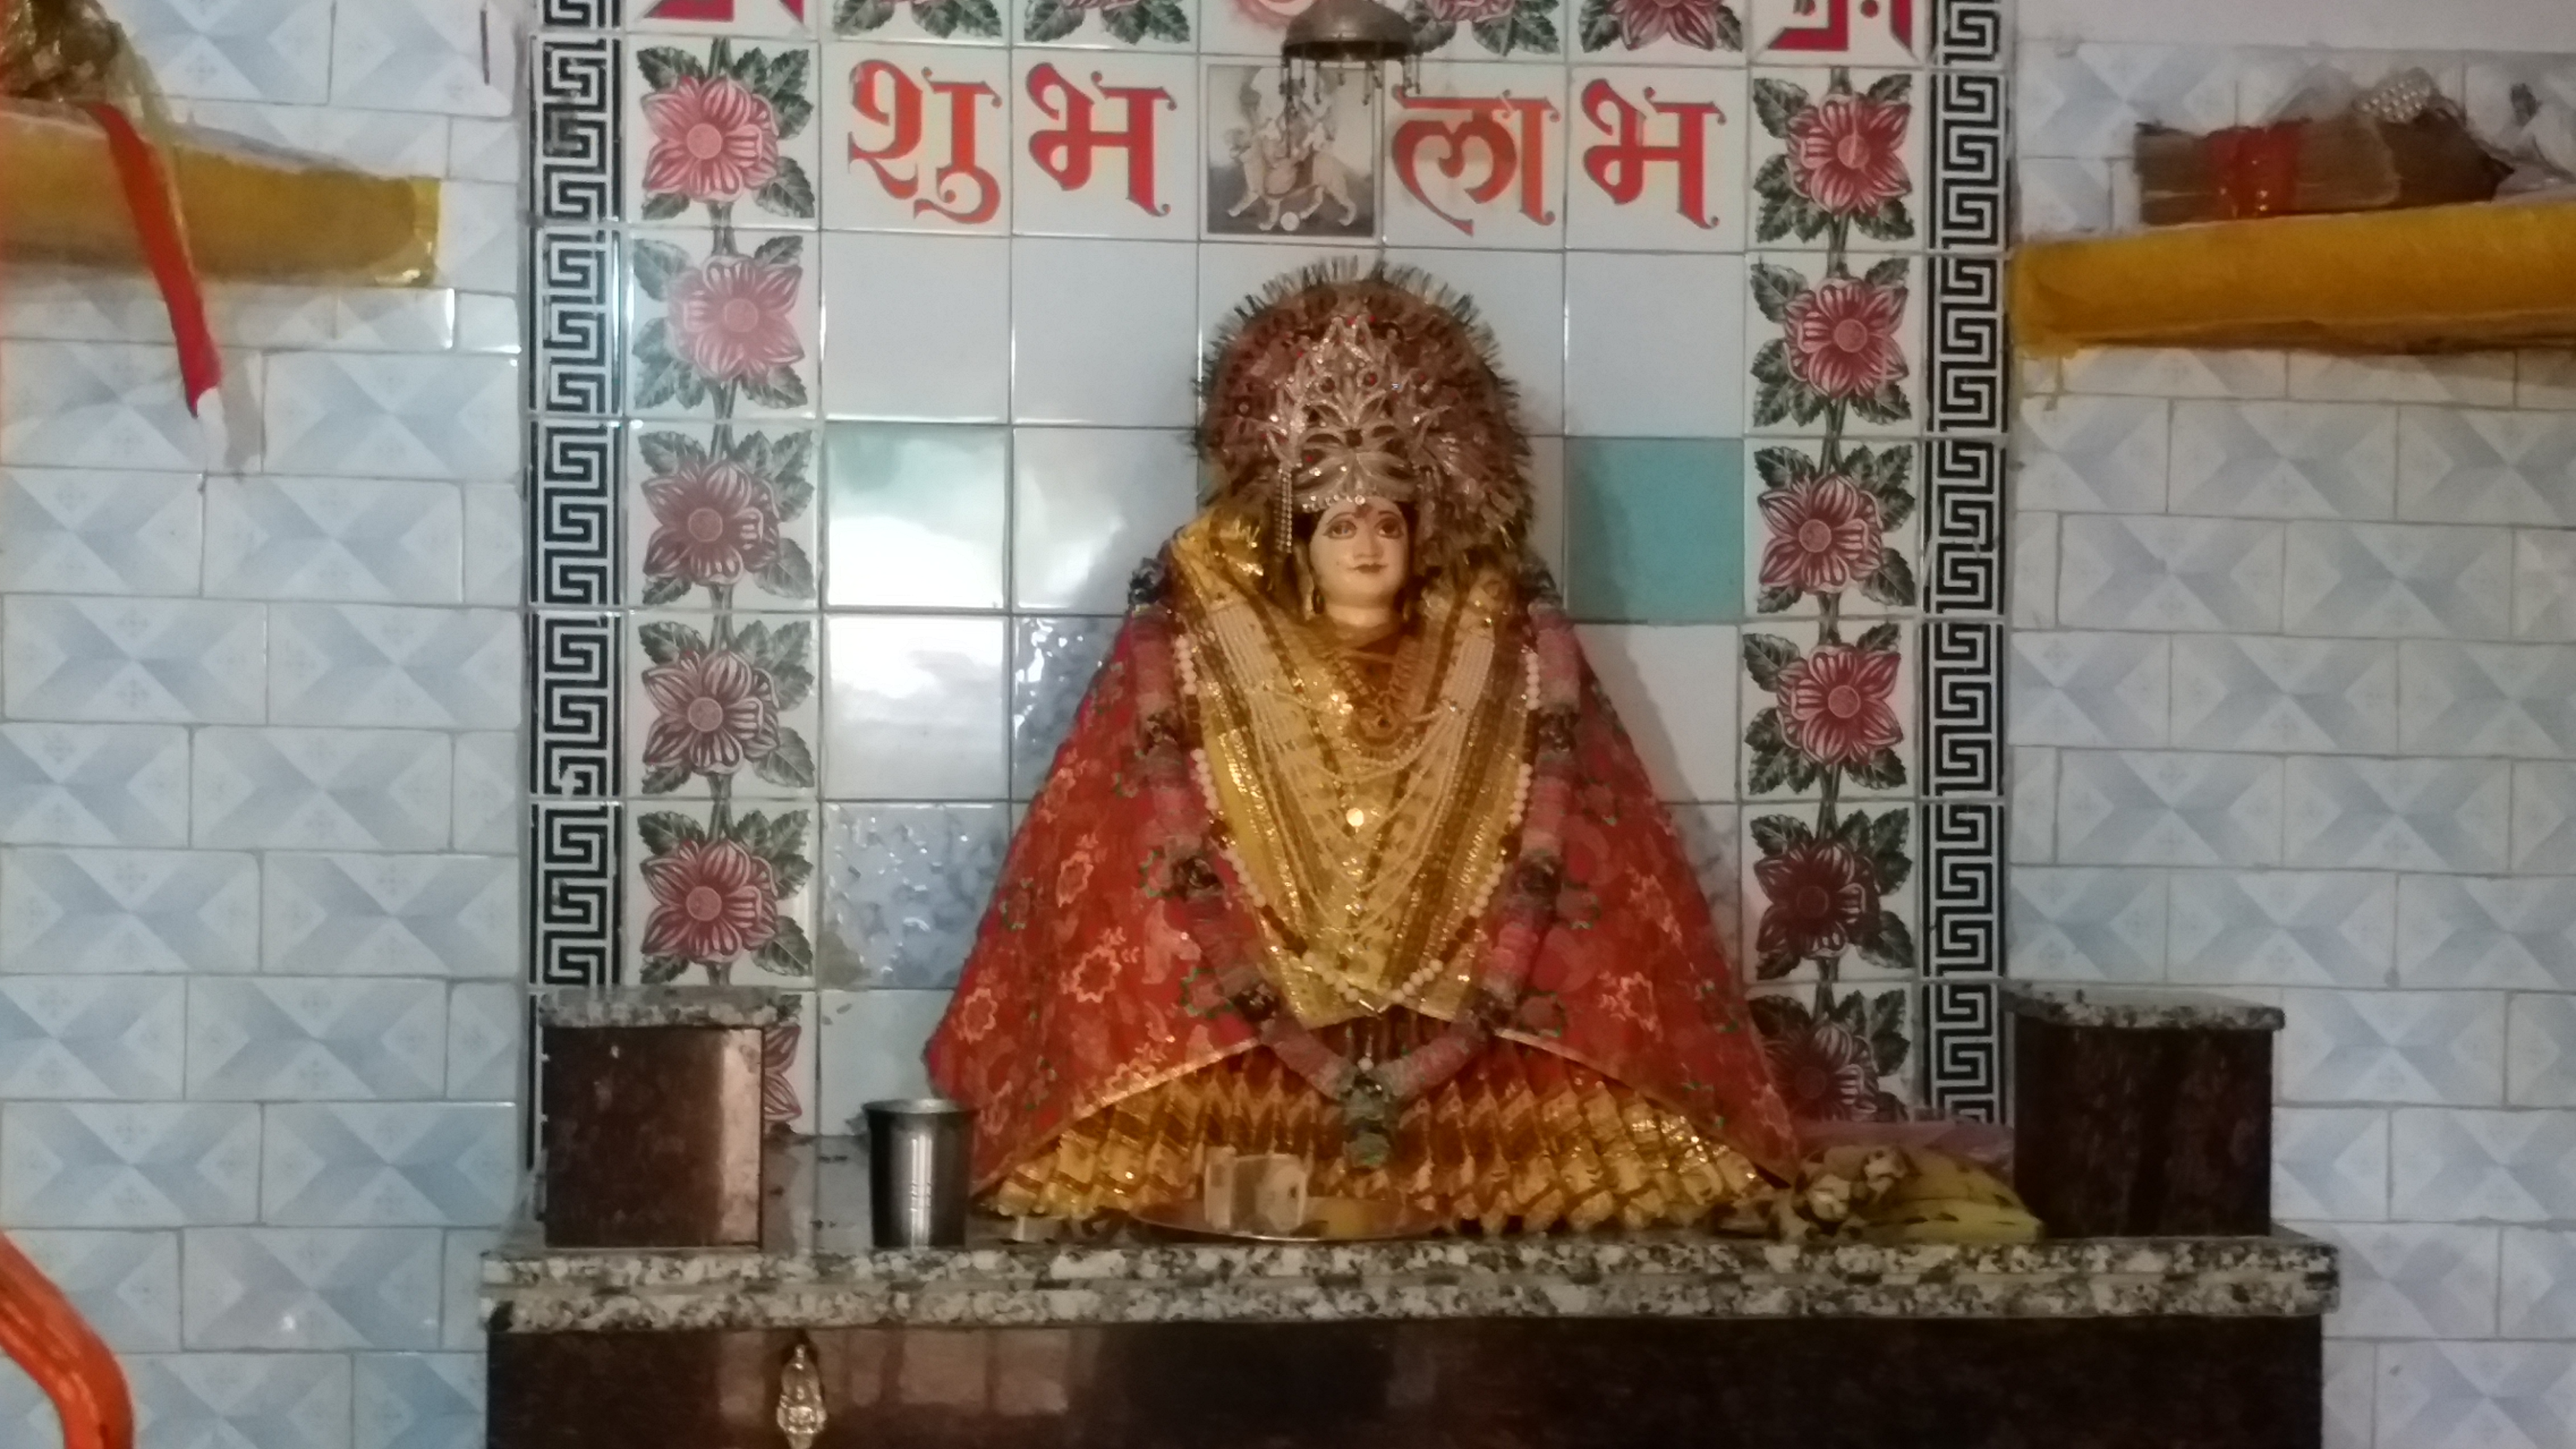 Sheetla Mata temple bhind